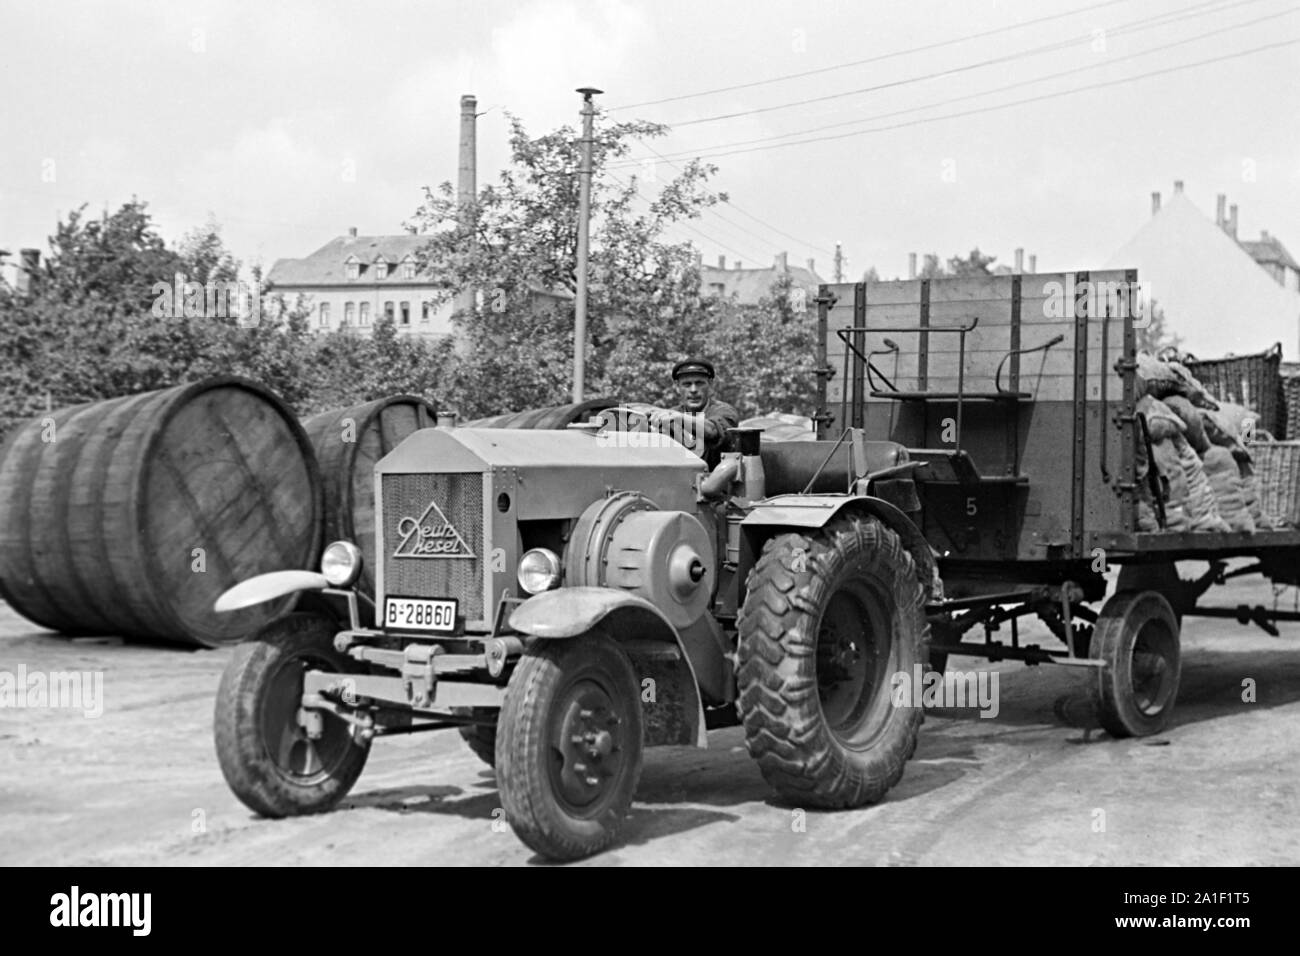 https://c8.alamy.com/comp/2A1F1T5/transport-von-gtern-innerhalb-der-konservenfabrik-c-th-lampe-in-braunschweig-deutschland-1939-transporting-goods-at-the-canning-factory-c-th-lampe-in-brunswick-germany-1939-2A1F1T5.jpg